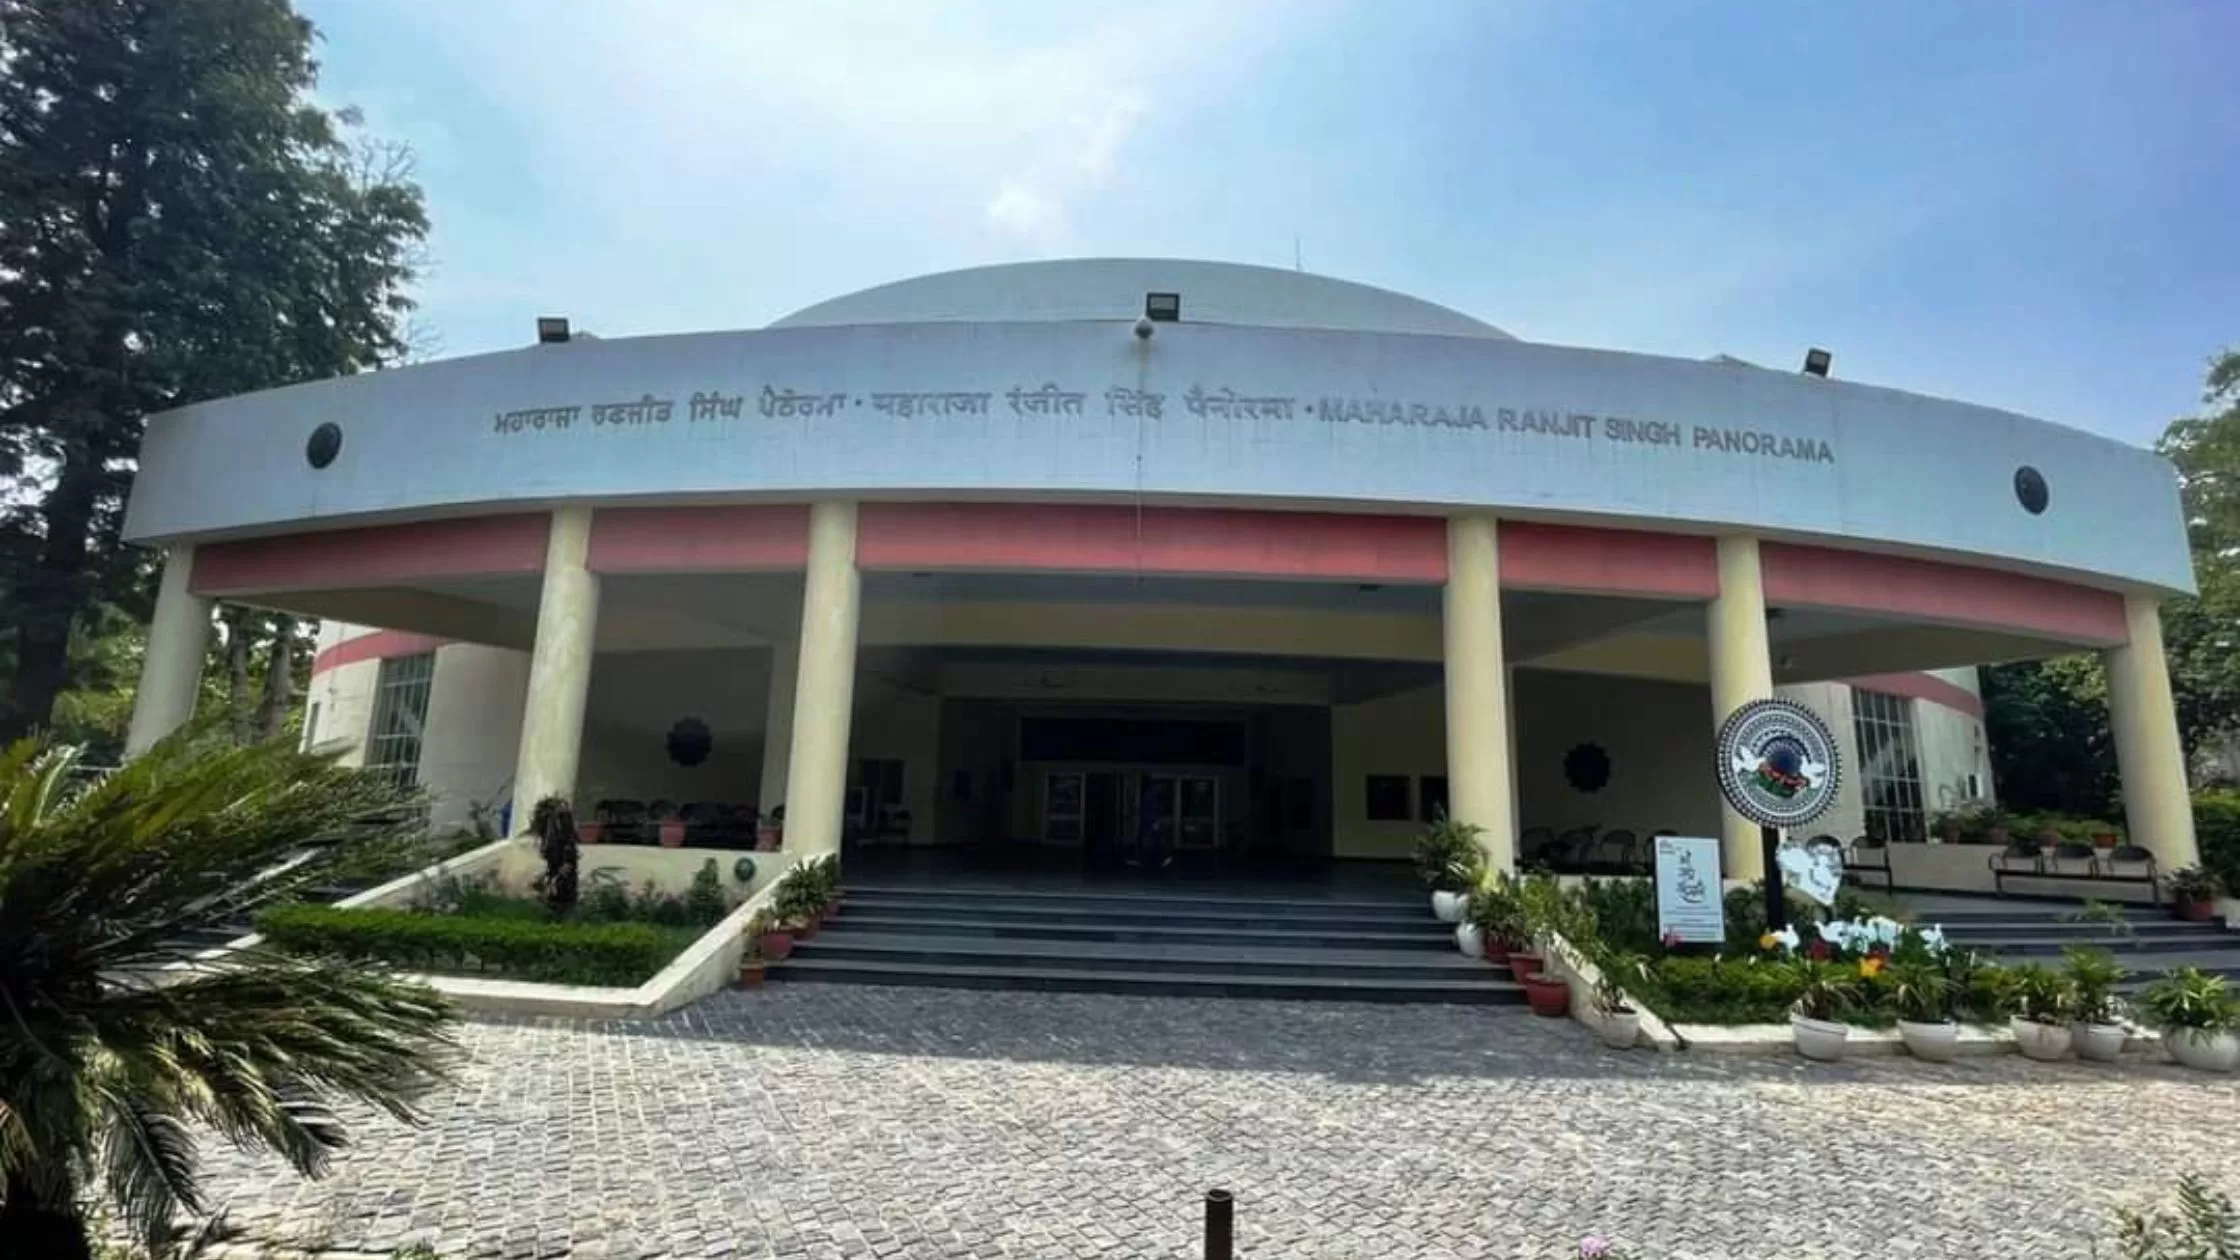 Outside view of Maharaj Ranjit Singh Museum in Amritsar